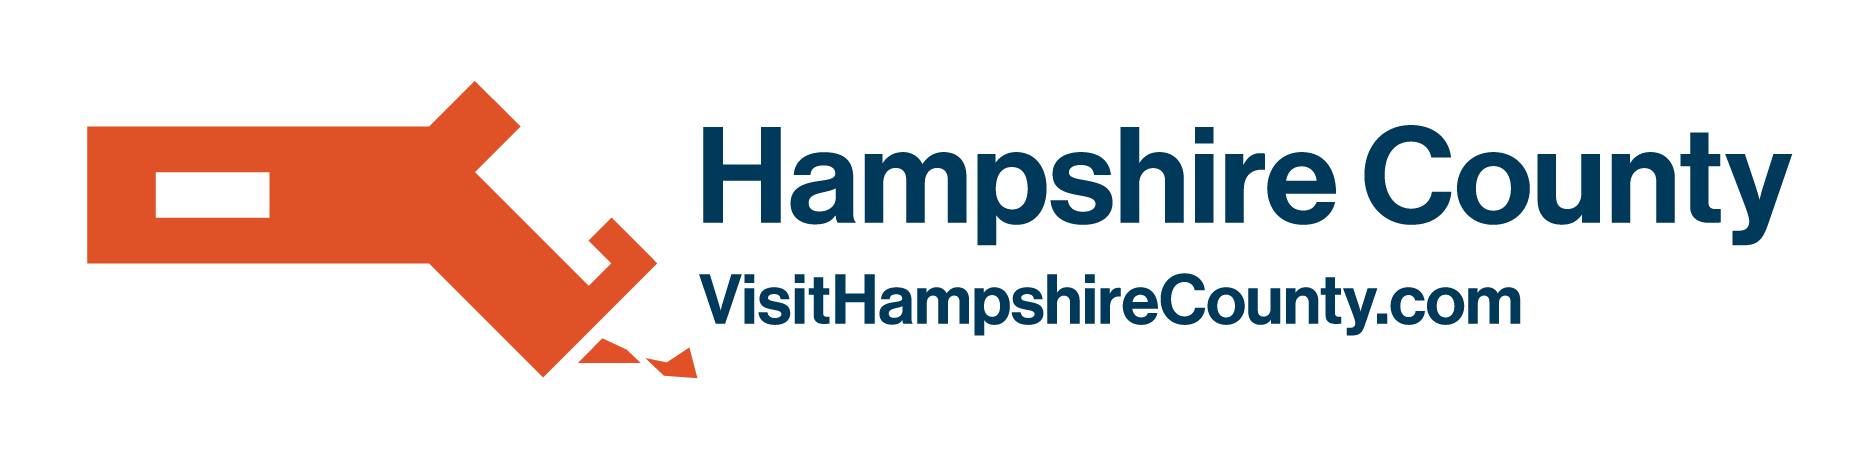 Visit Hampshire County